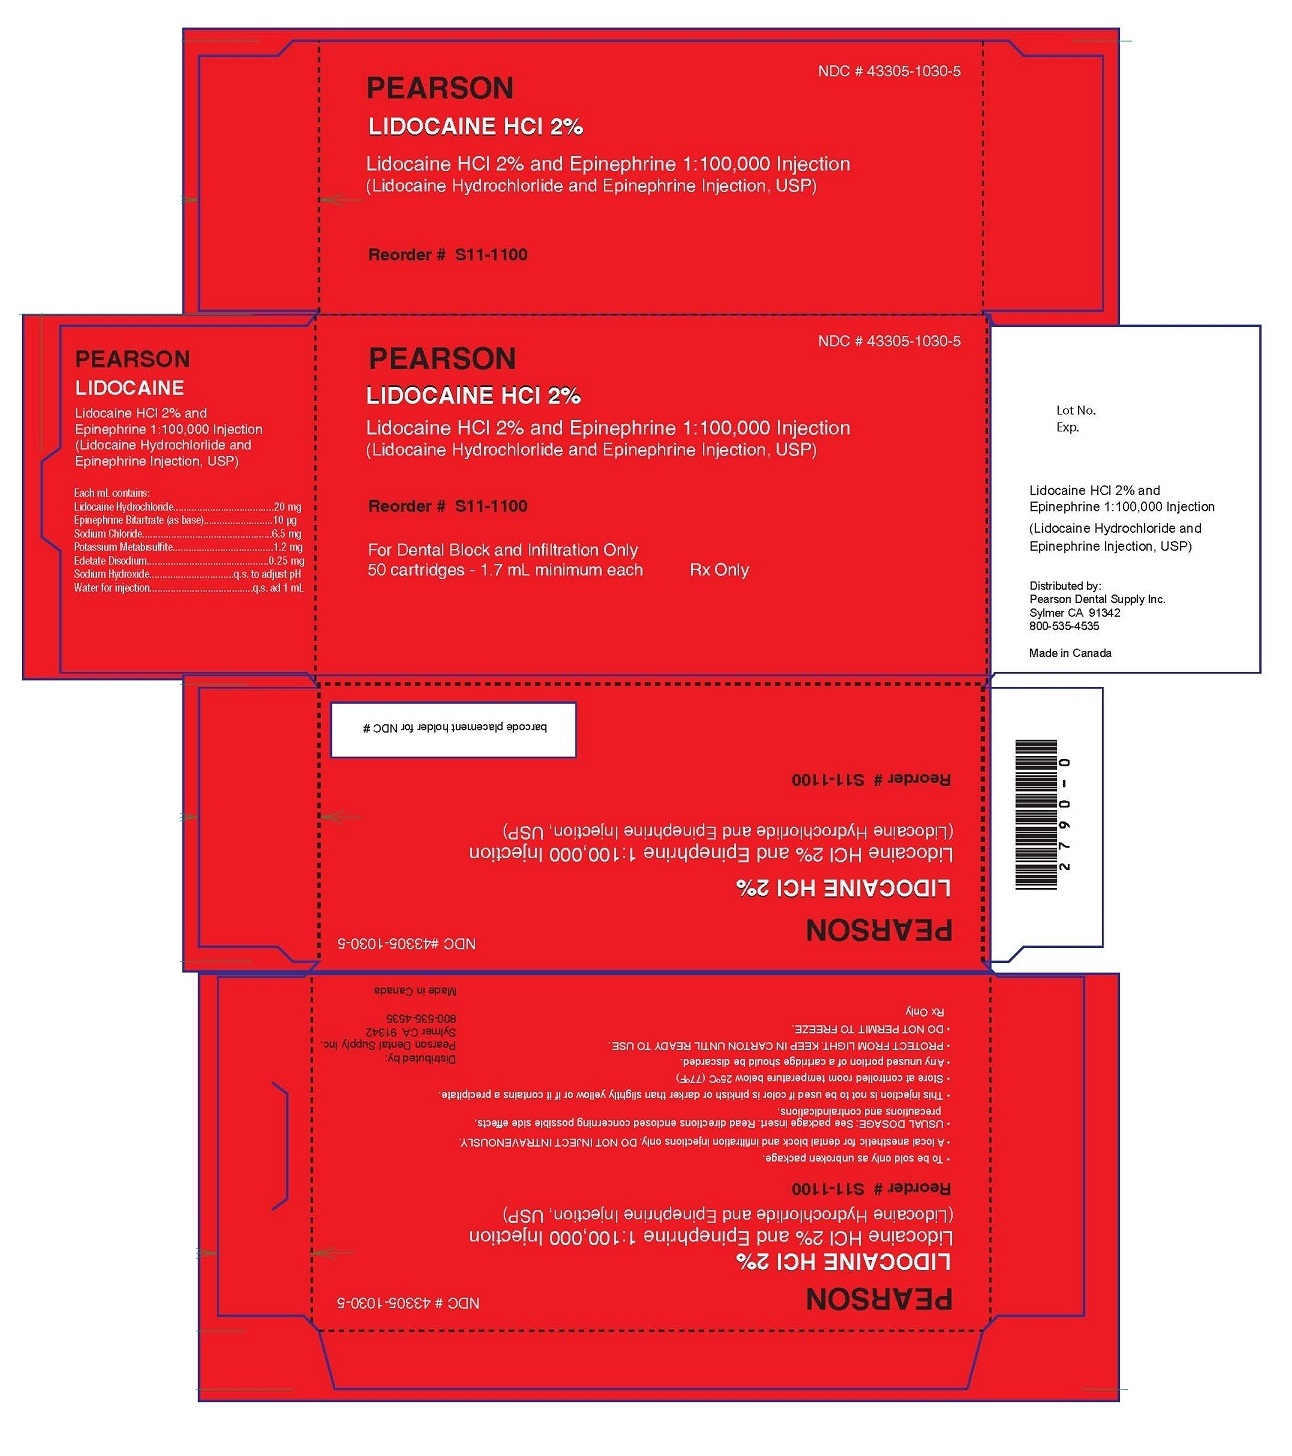 PRINCIPAL DISPLAY PANEL - 1.7 mL Cartridge Carton